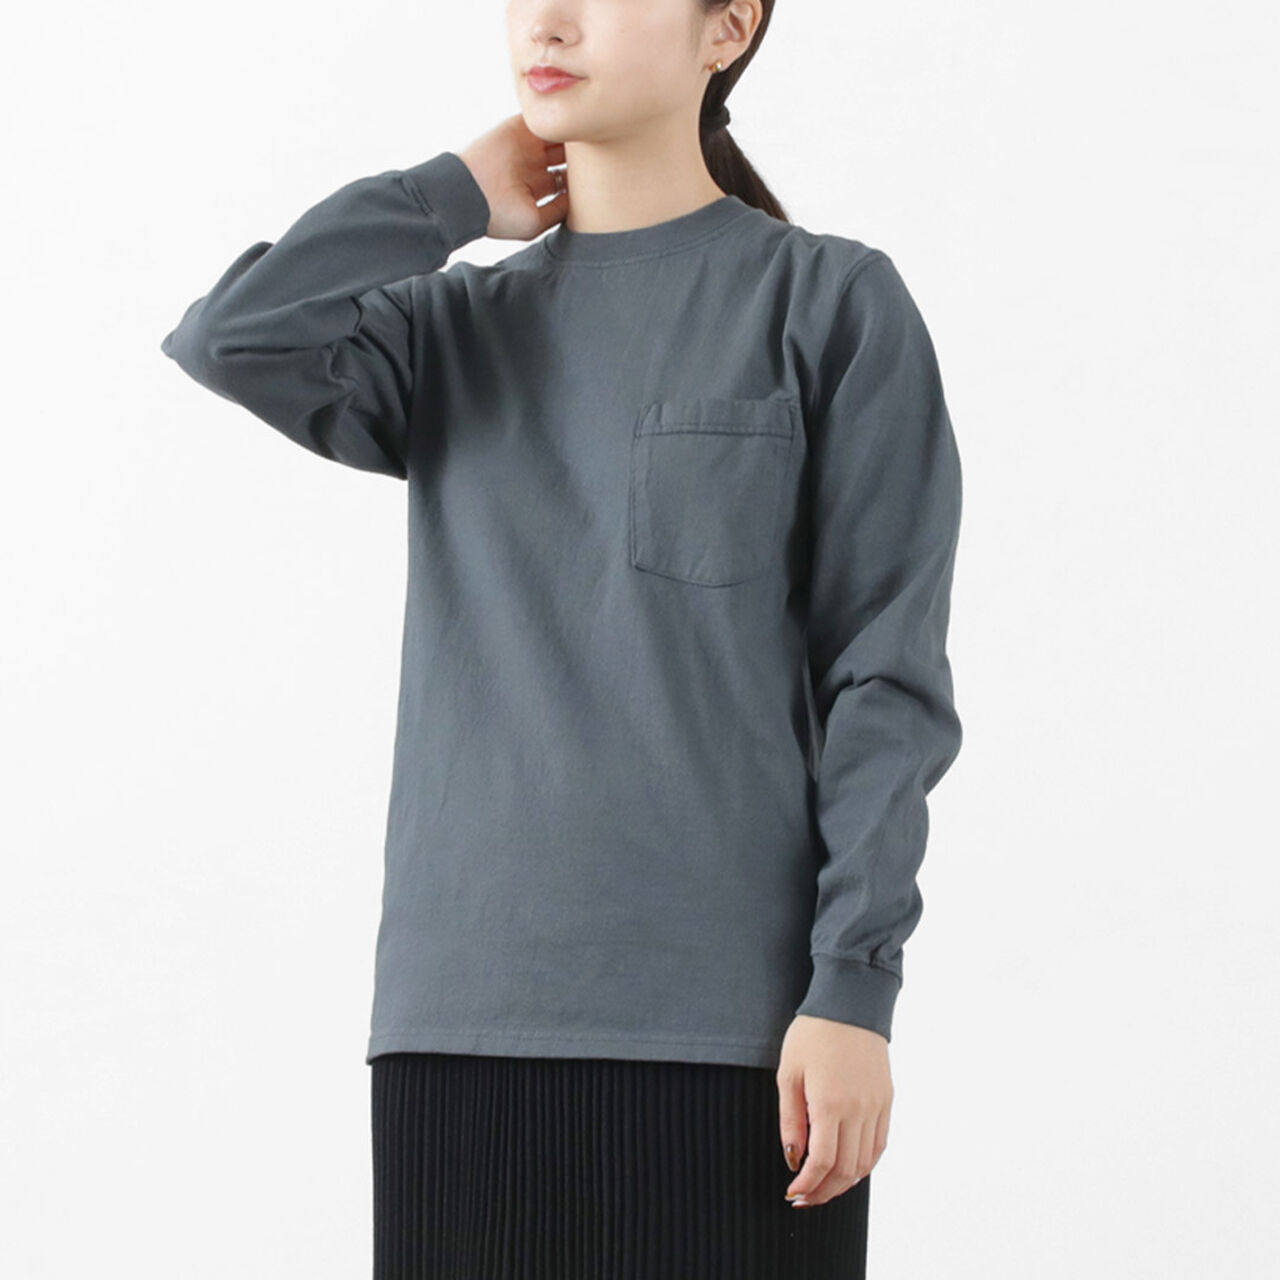 Crew Neck Pocket T-Shirt Long Sleeve,Charcoal, large image number 0